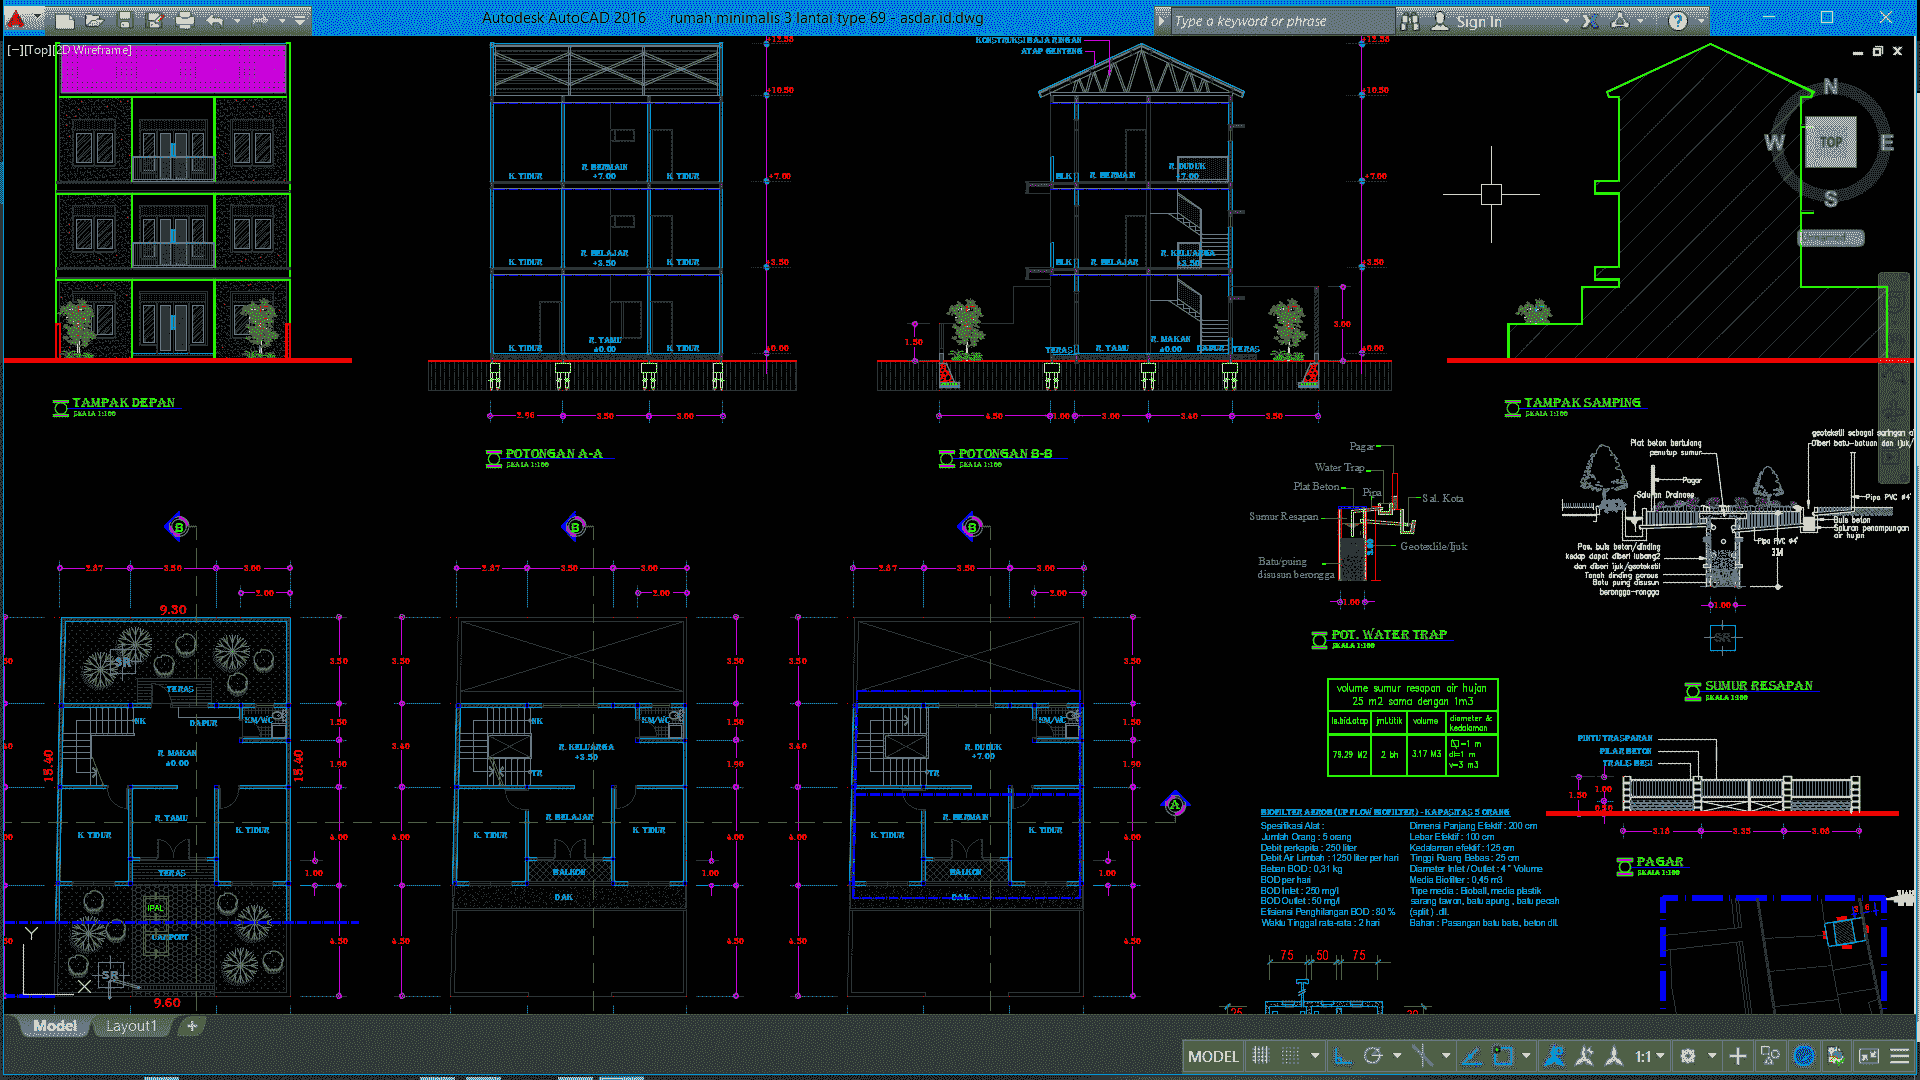  Download  Desain  Rumah  Minimalis  3 lantai Type 69 DWG AutoCAD  Asdar Id